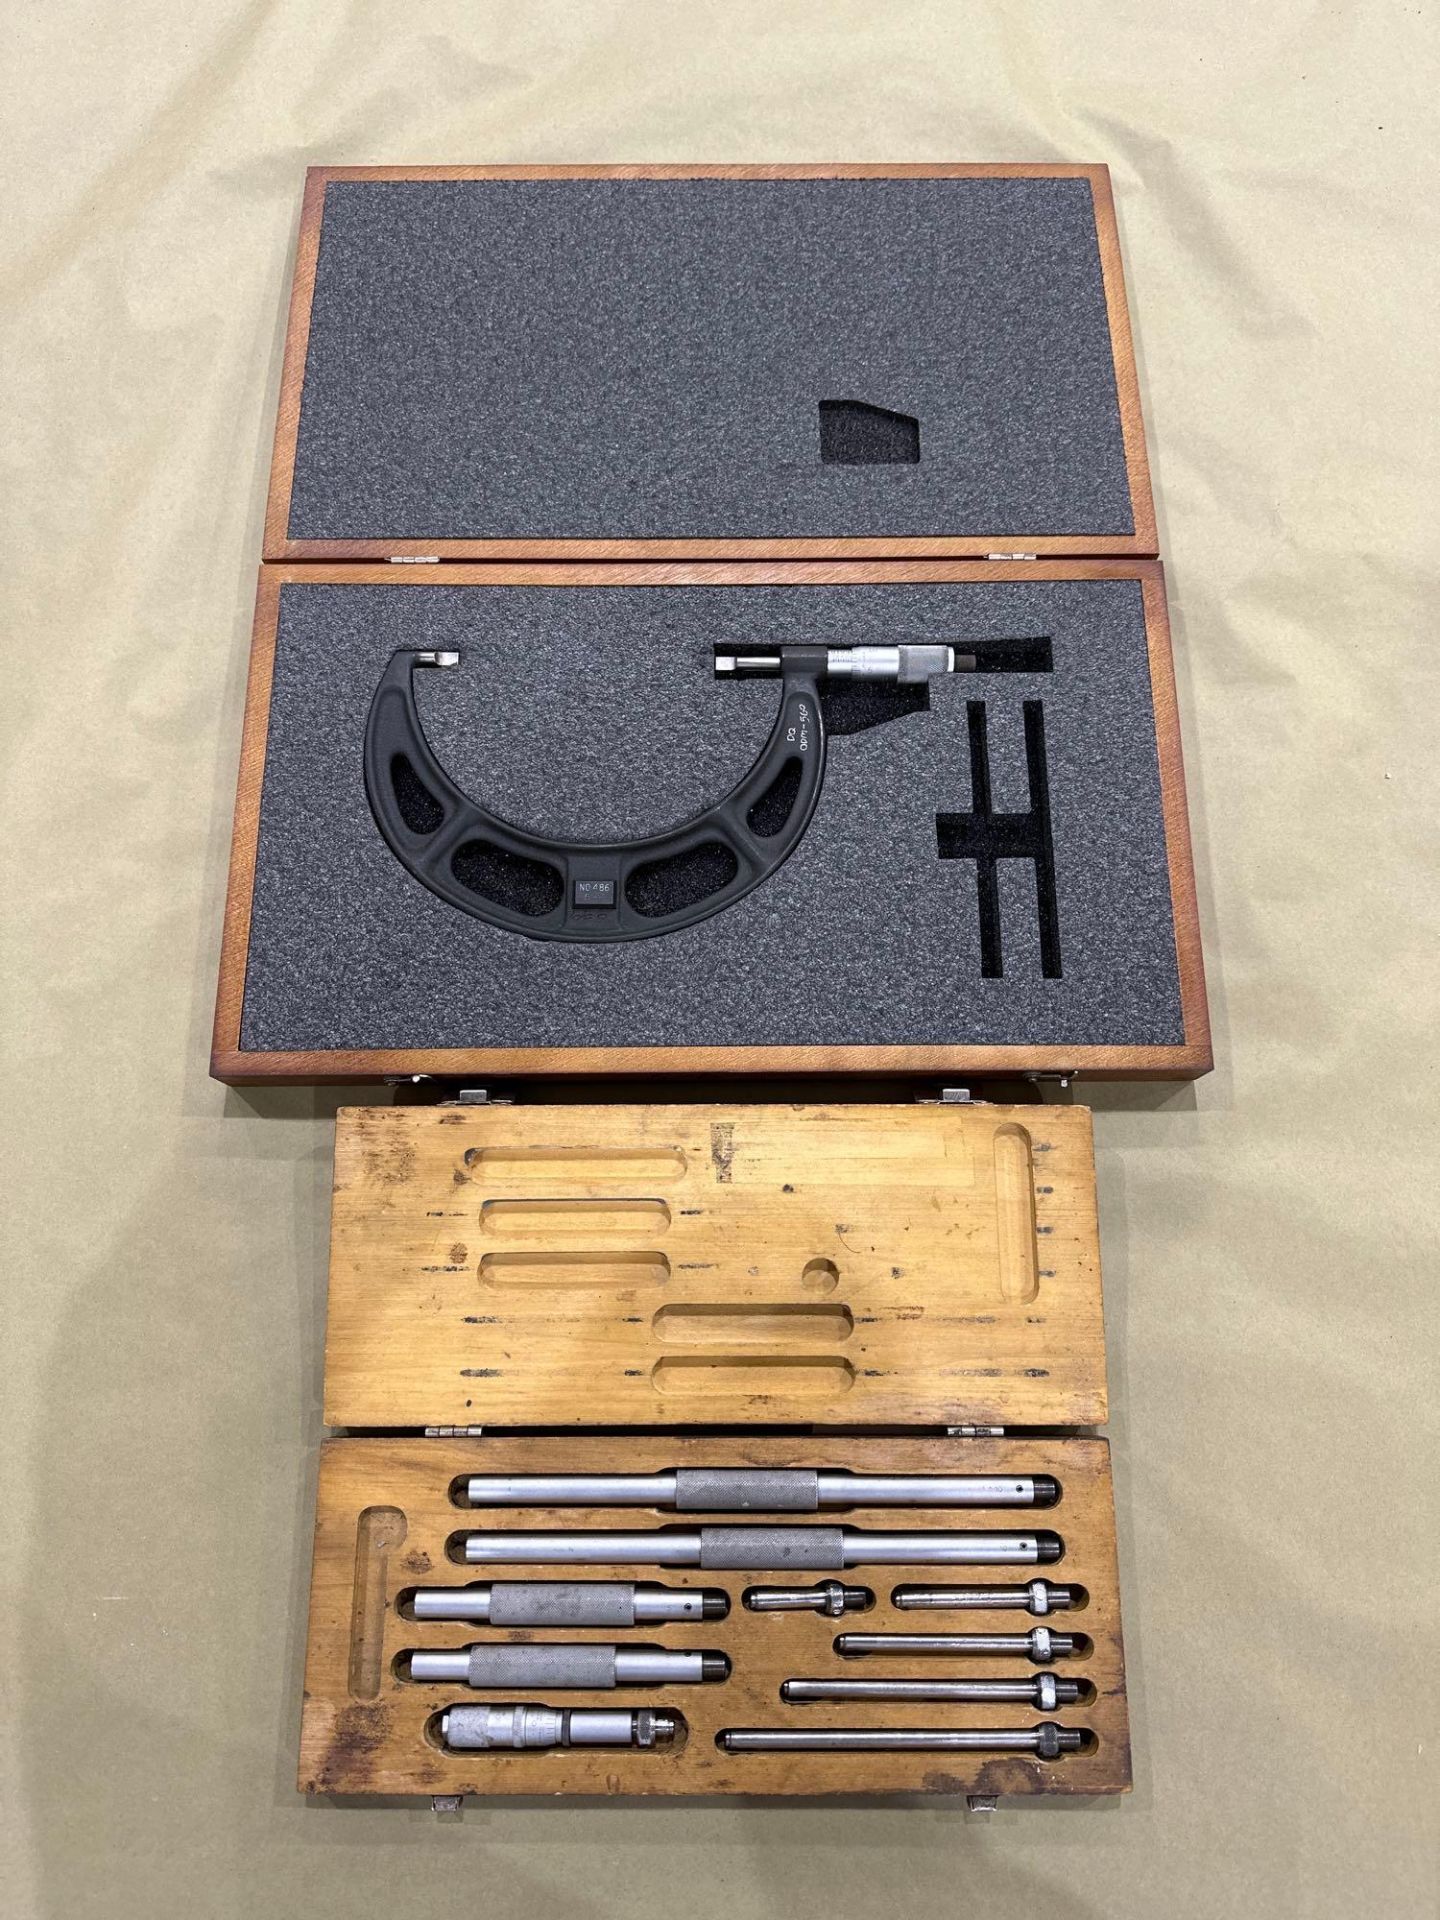 Lot of 2: (1) Starrett Blade Micrometer No. 486, (1) Scherr-Tumico Tubular Inside Micrometer 4-40"